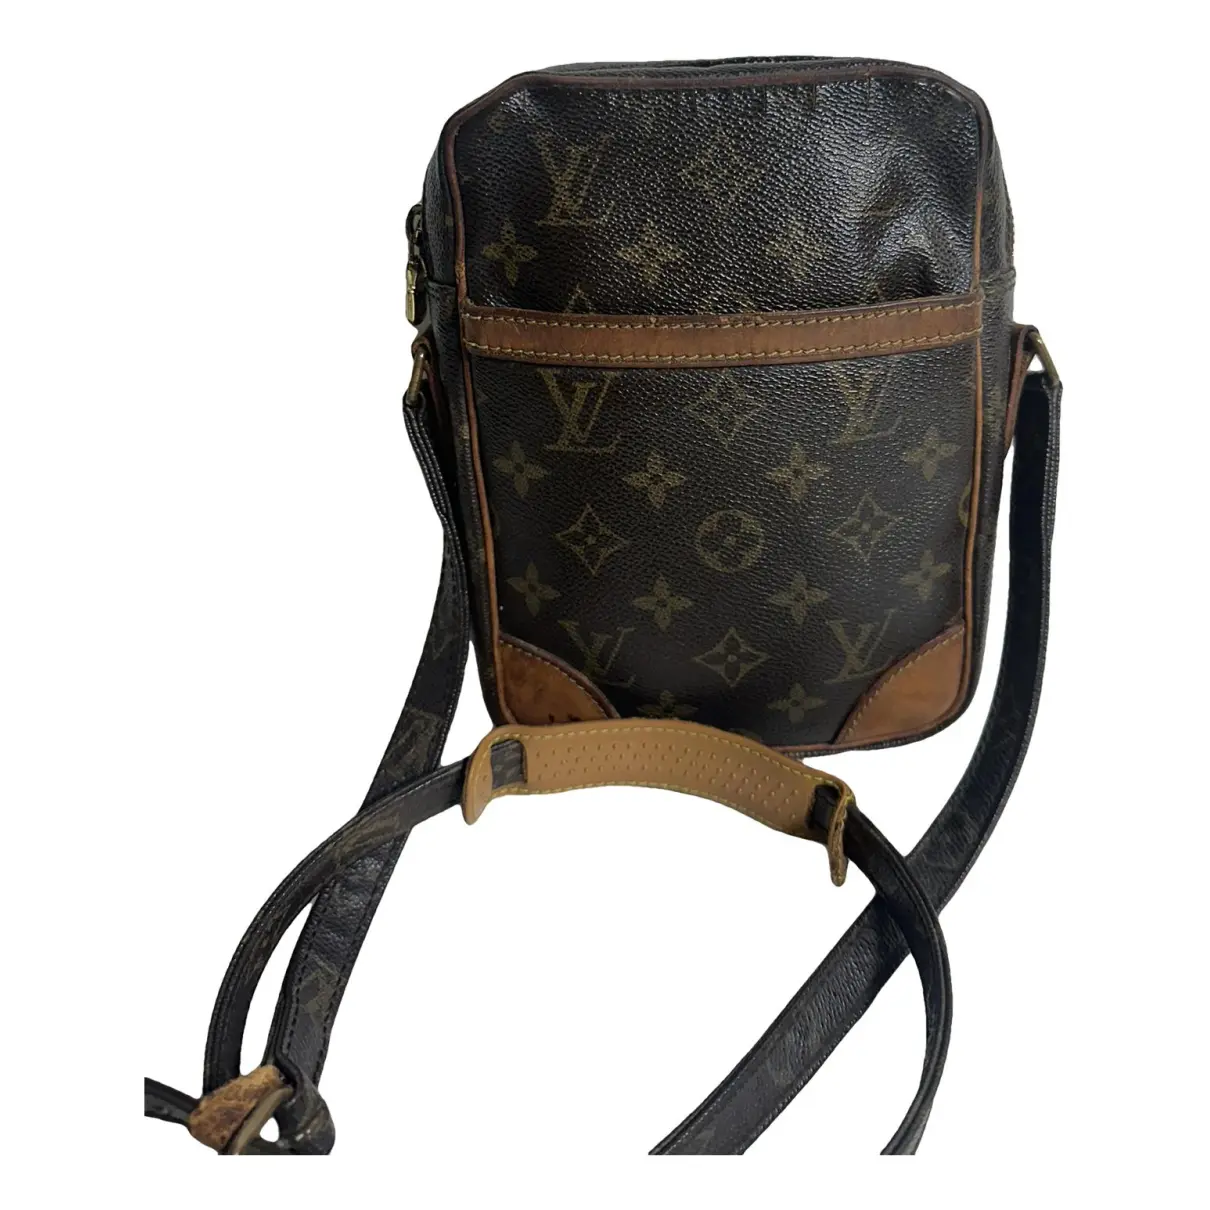 Danube leather crossbody bag